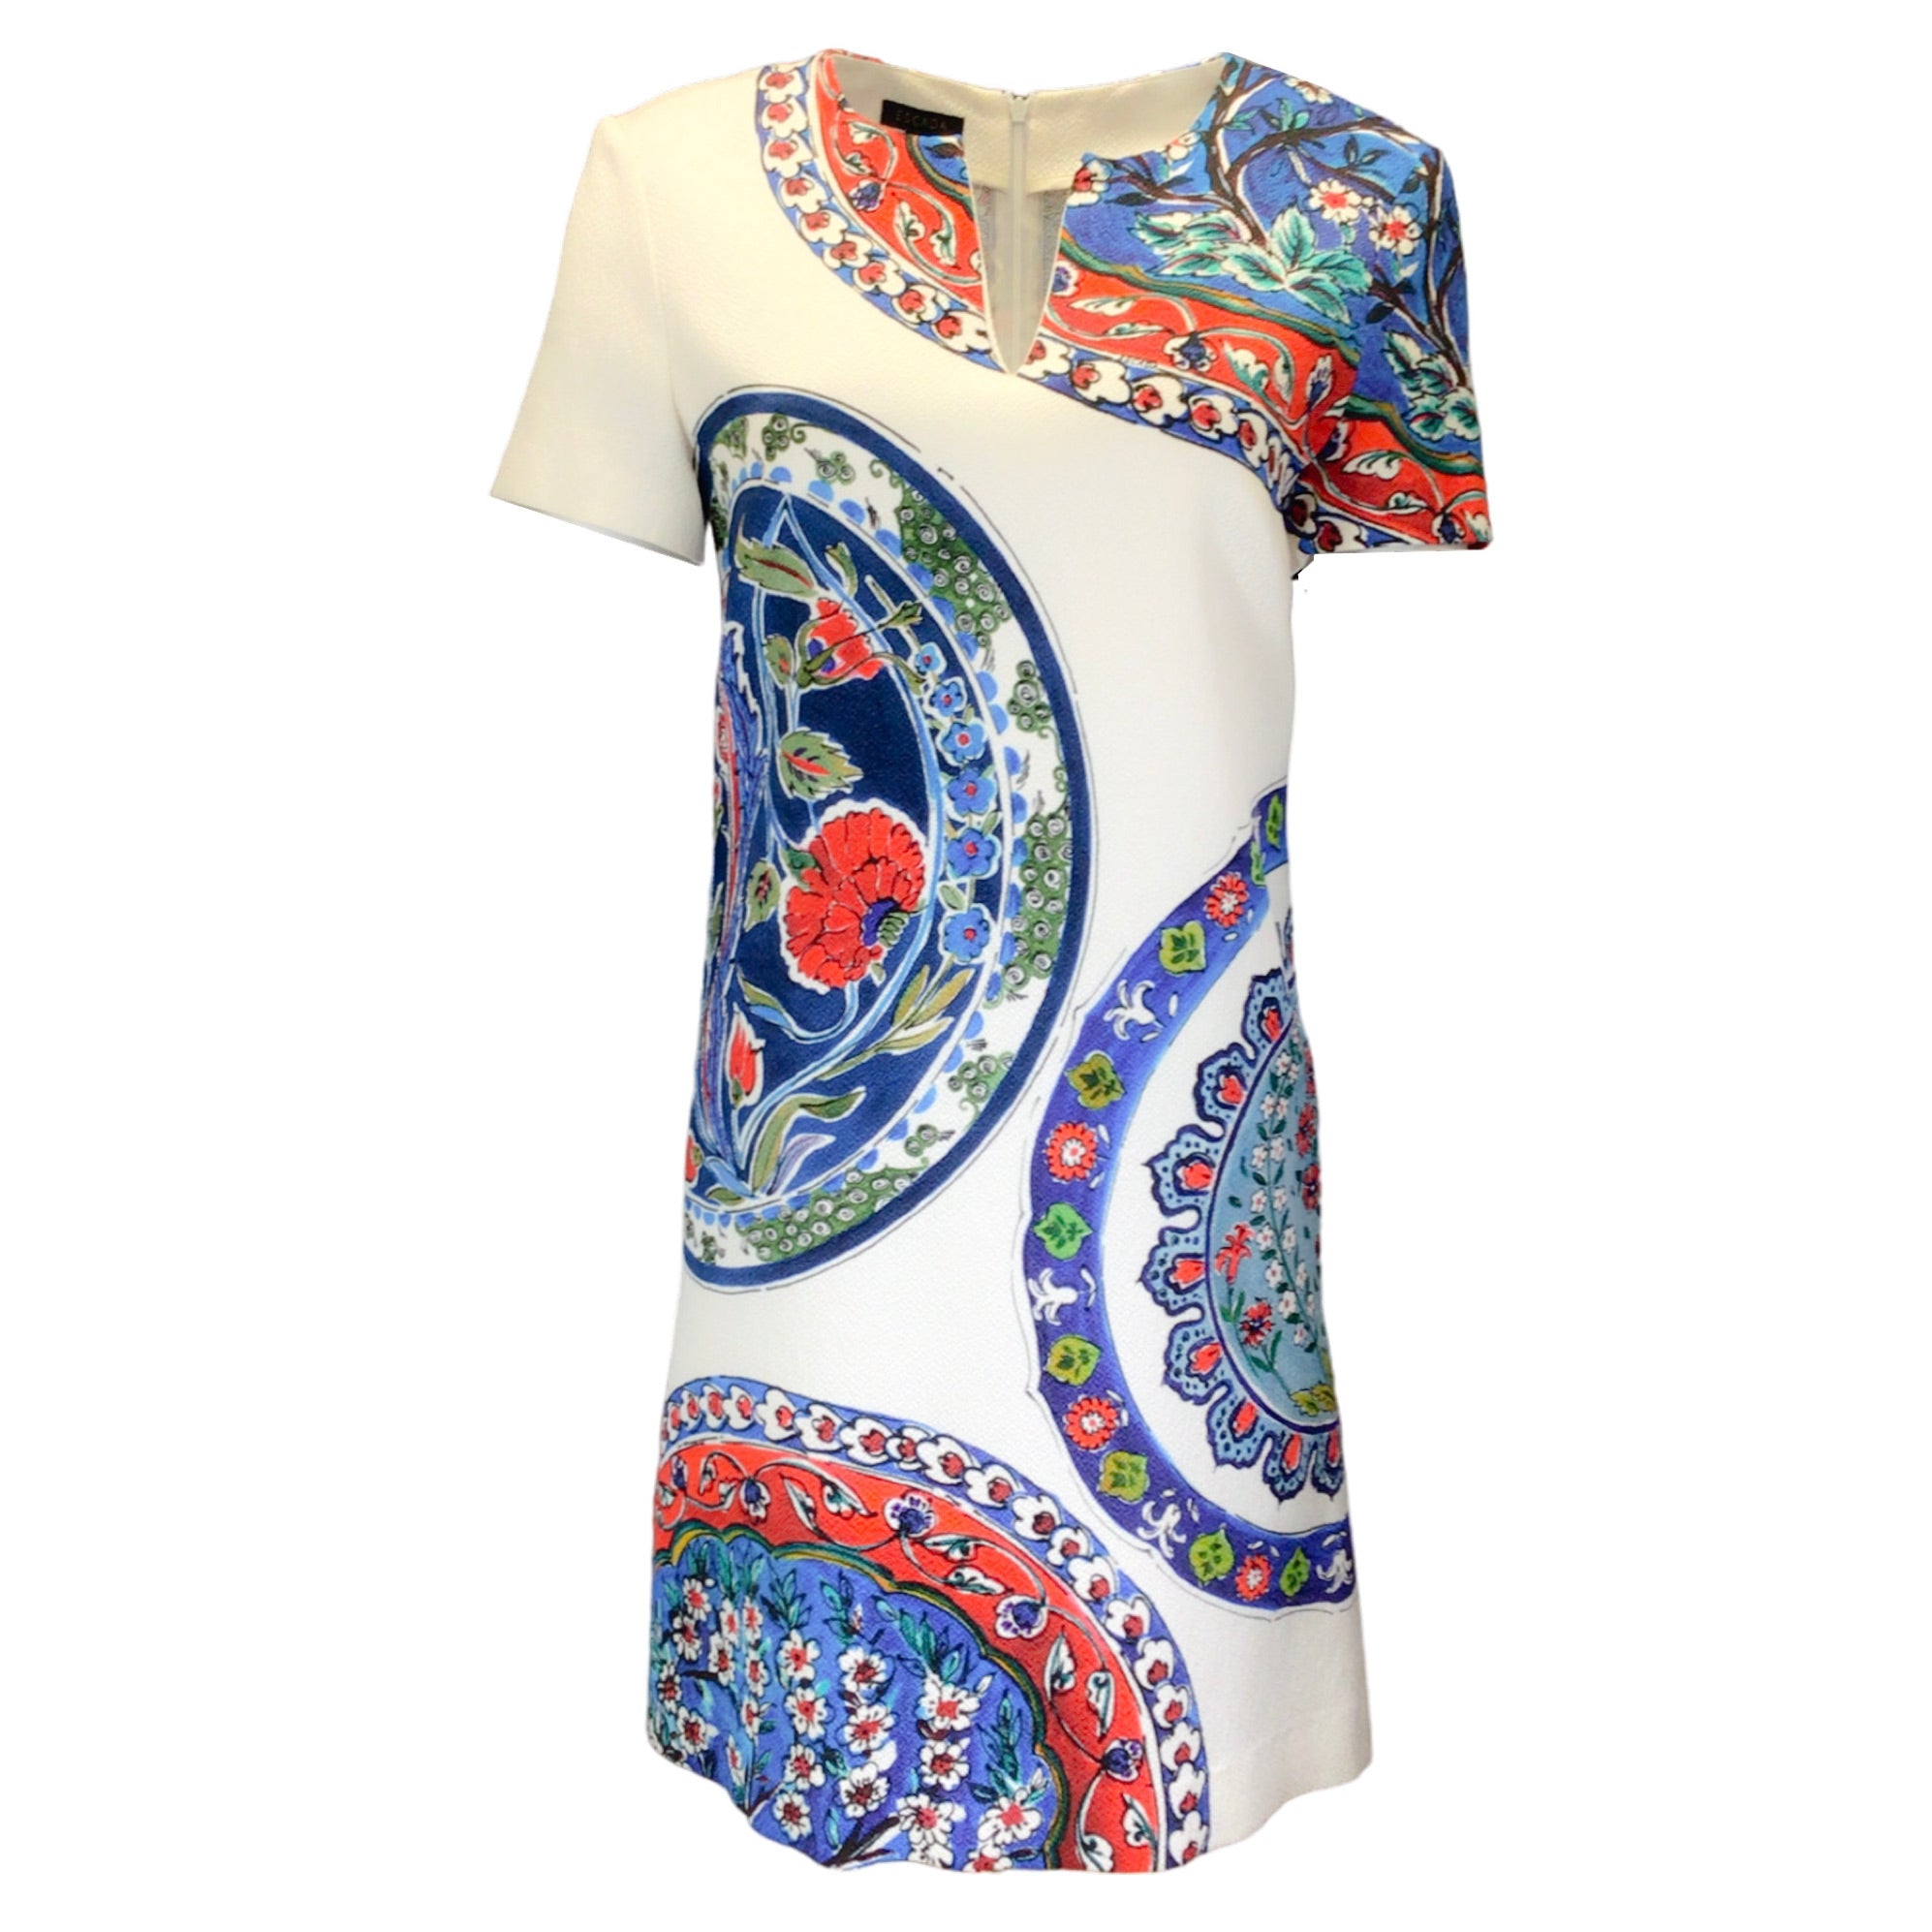 Escada Ivory / Blue Multi Printed Short Sleeved Jacquard Dress